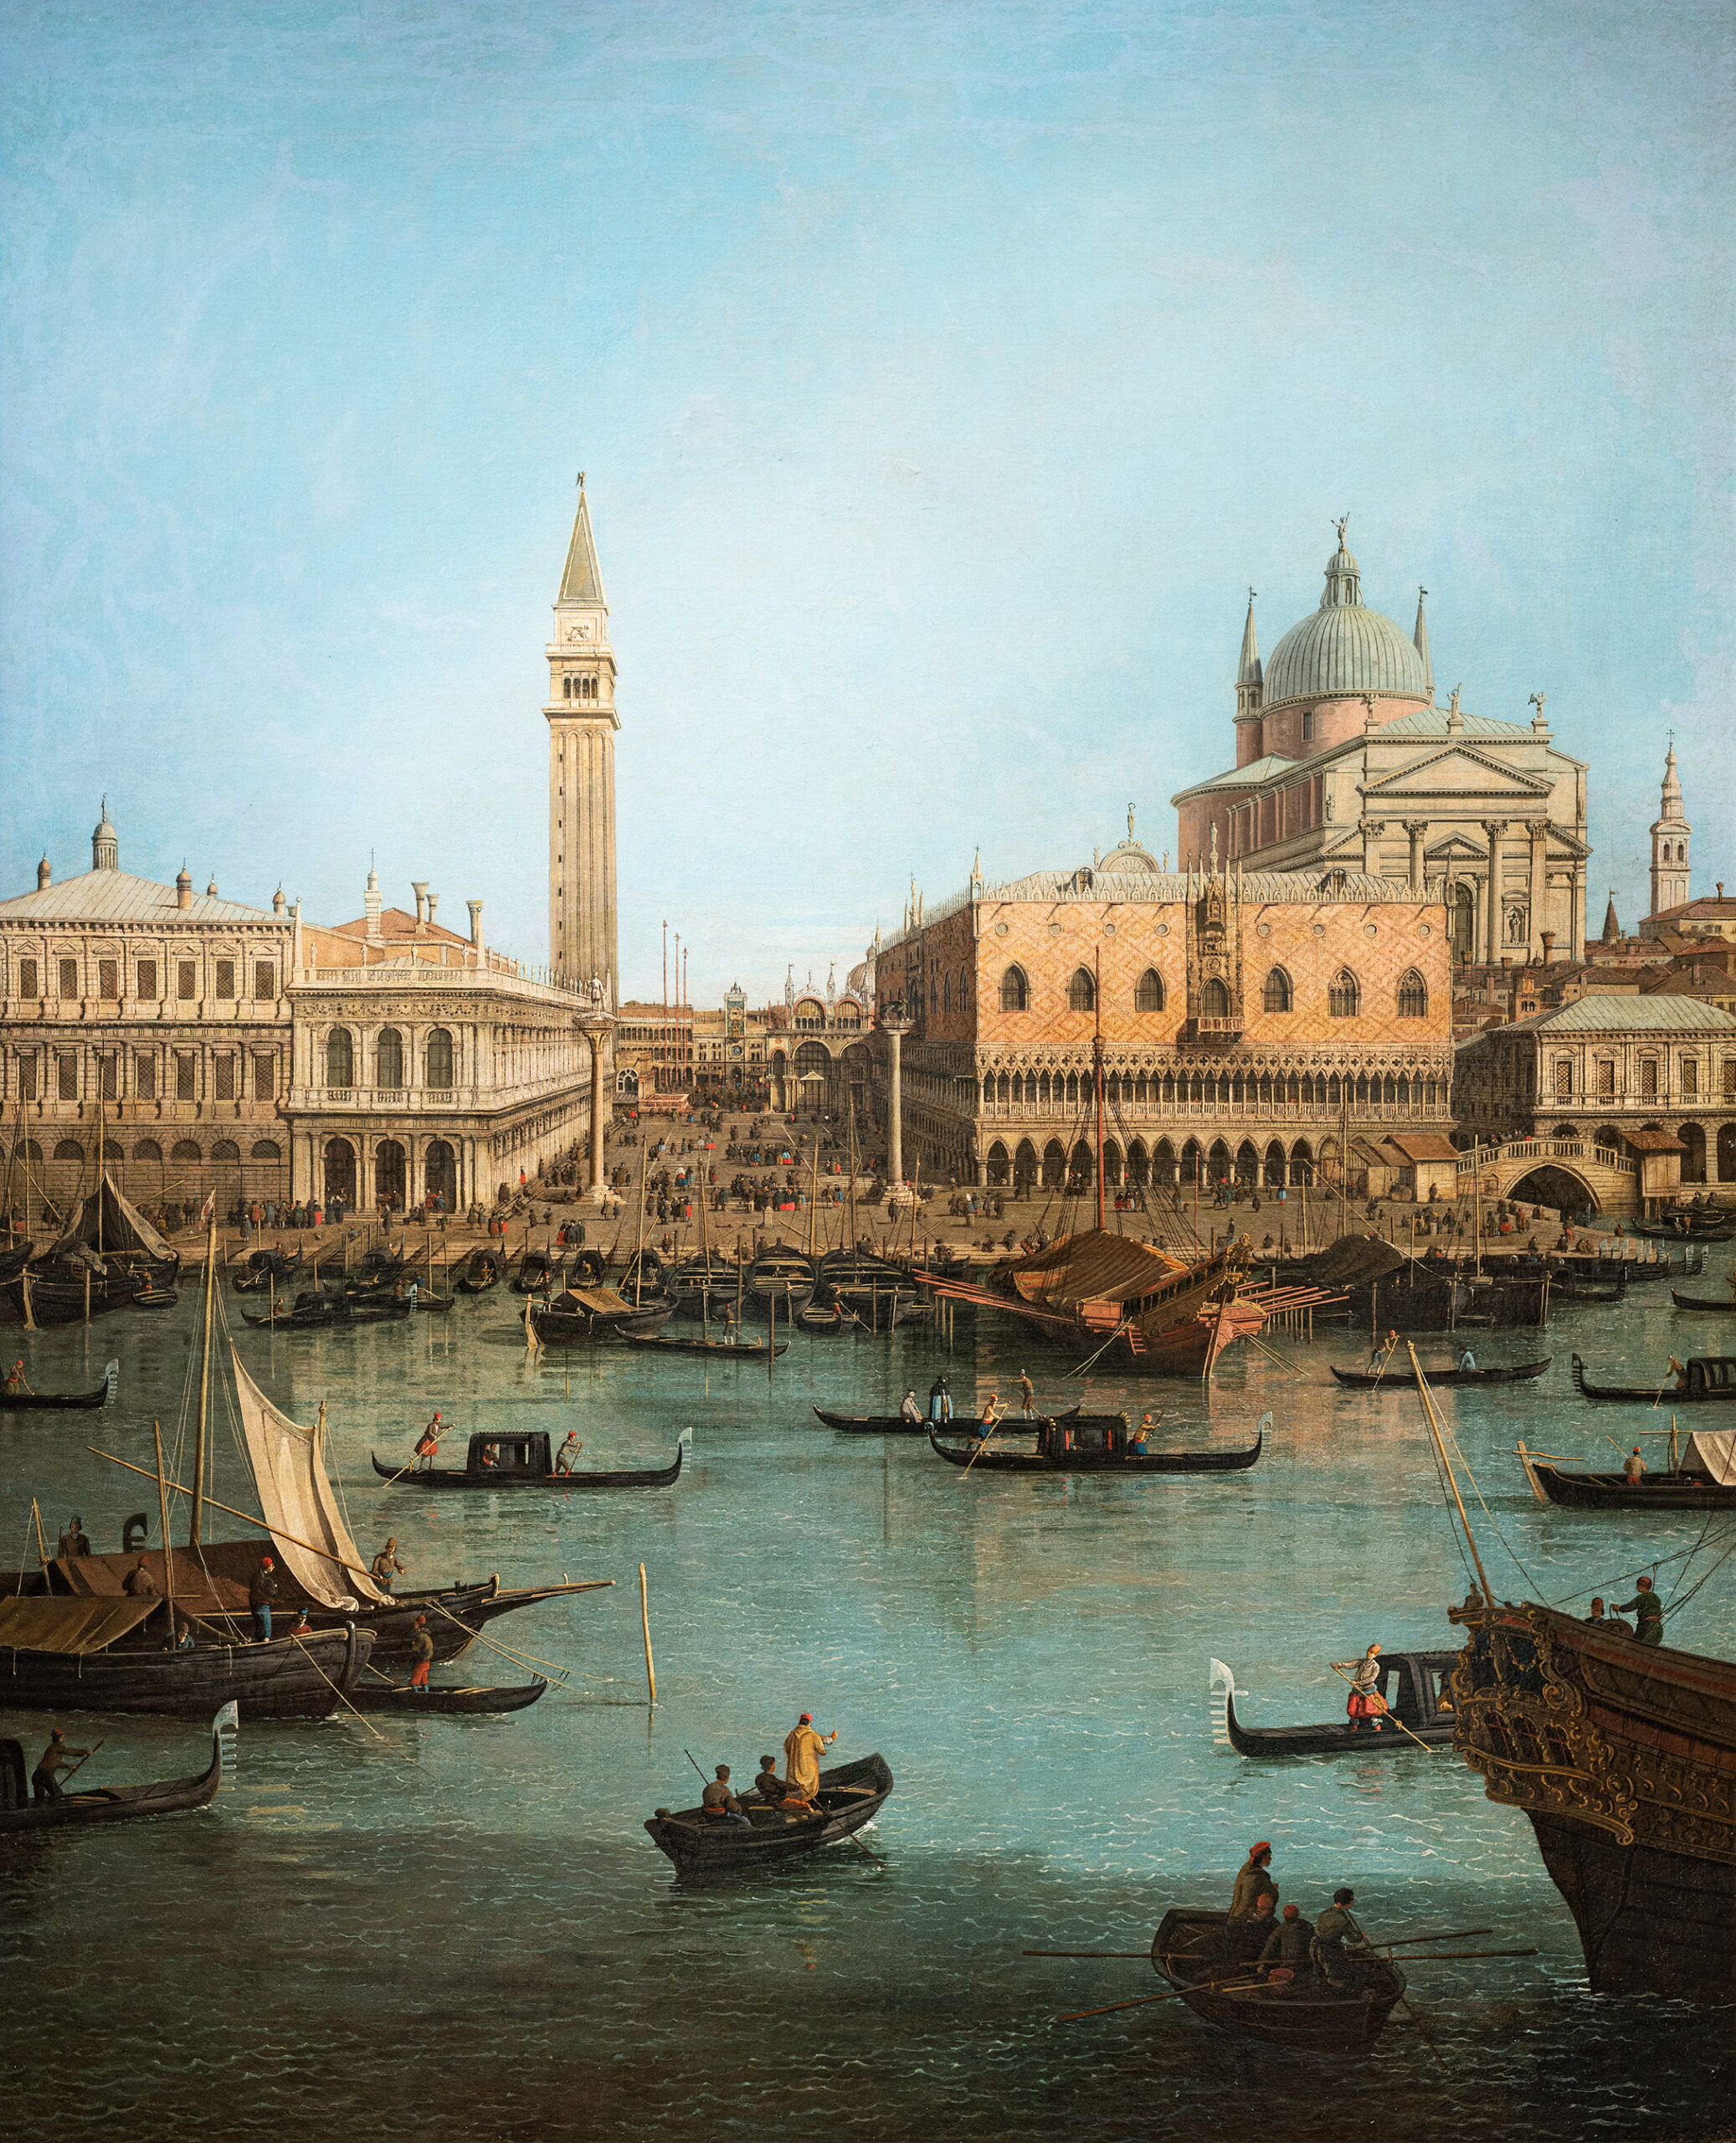 Giovanni Antonio Canal, called Canaletto